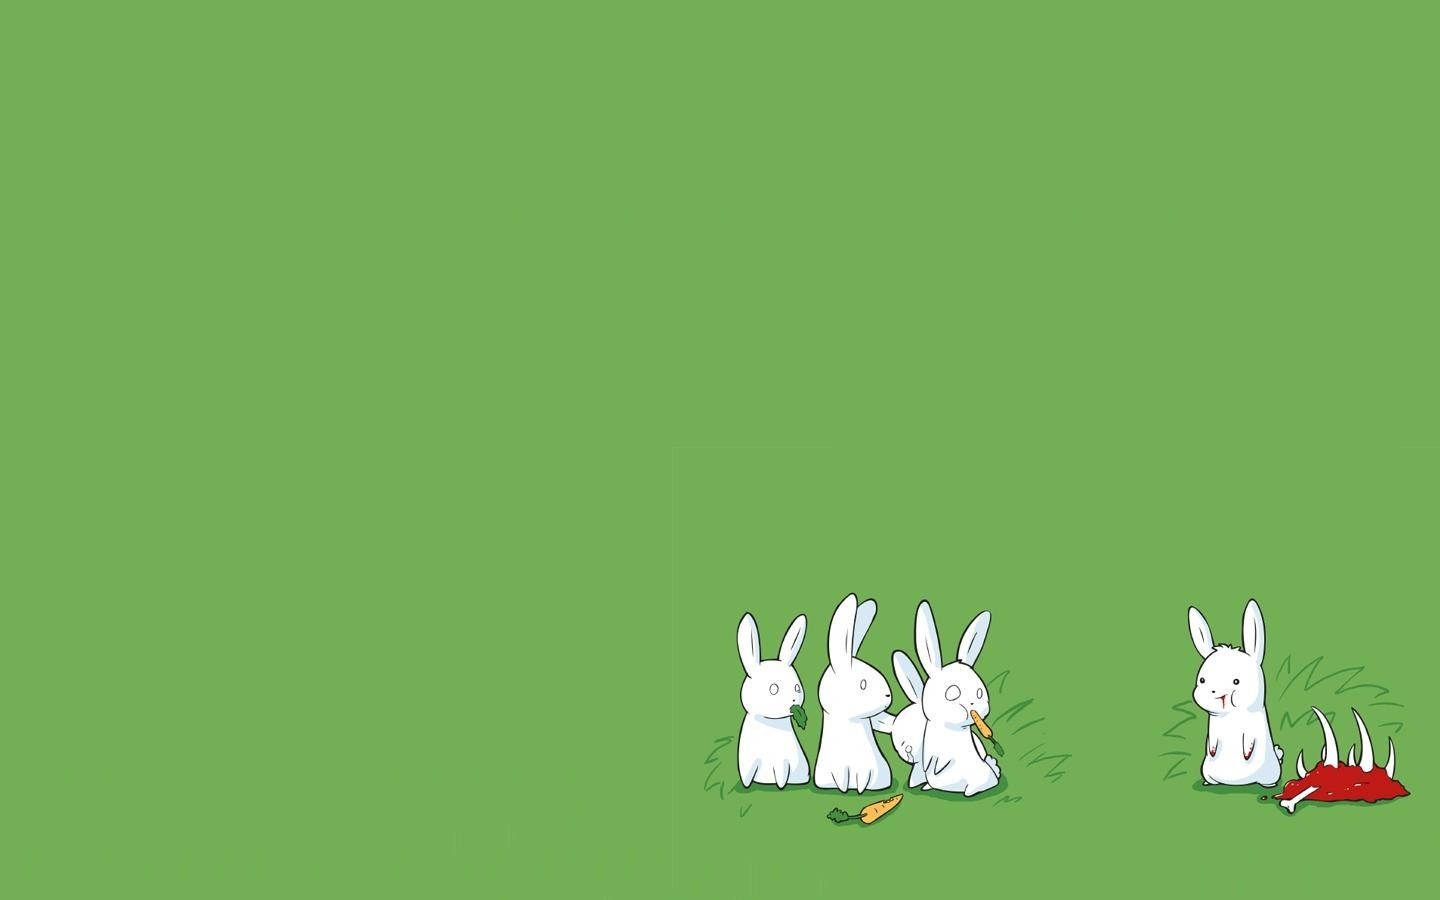 General 1440x900 rabbits dark humor minimalism carrots bones blood green background